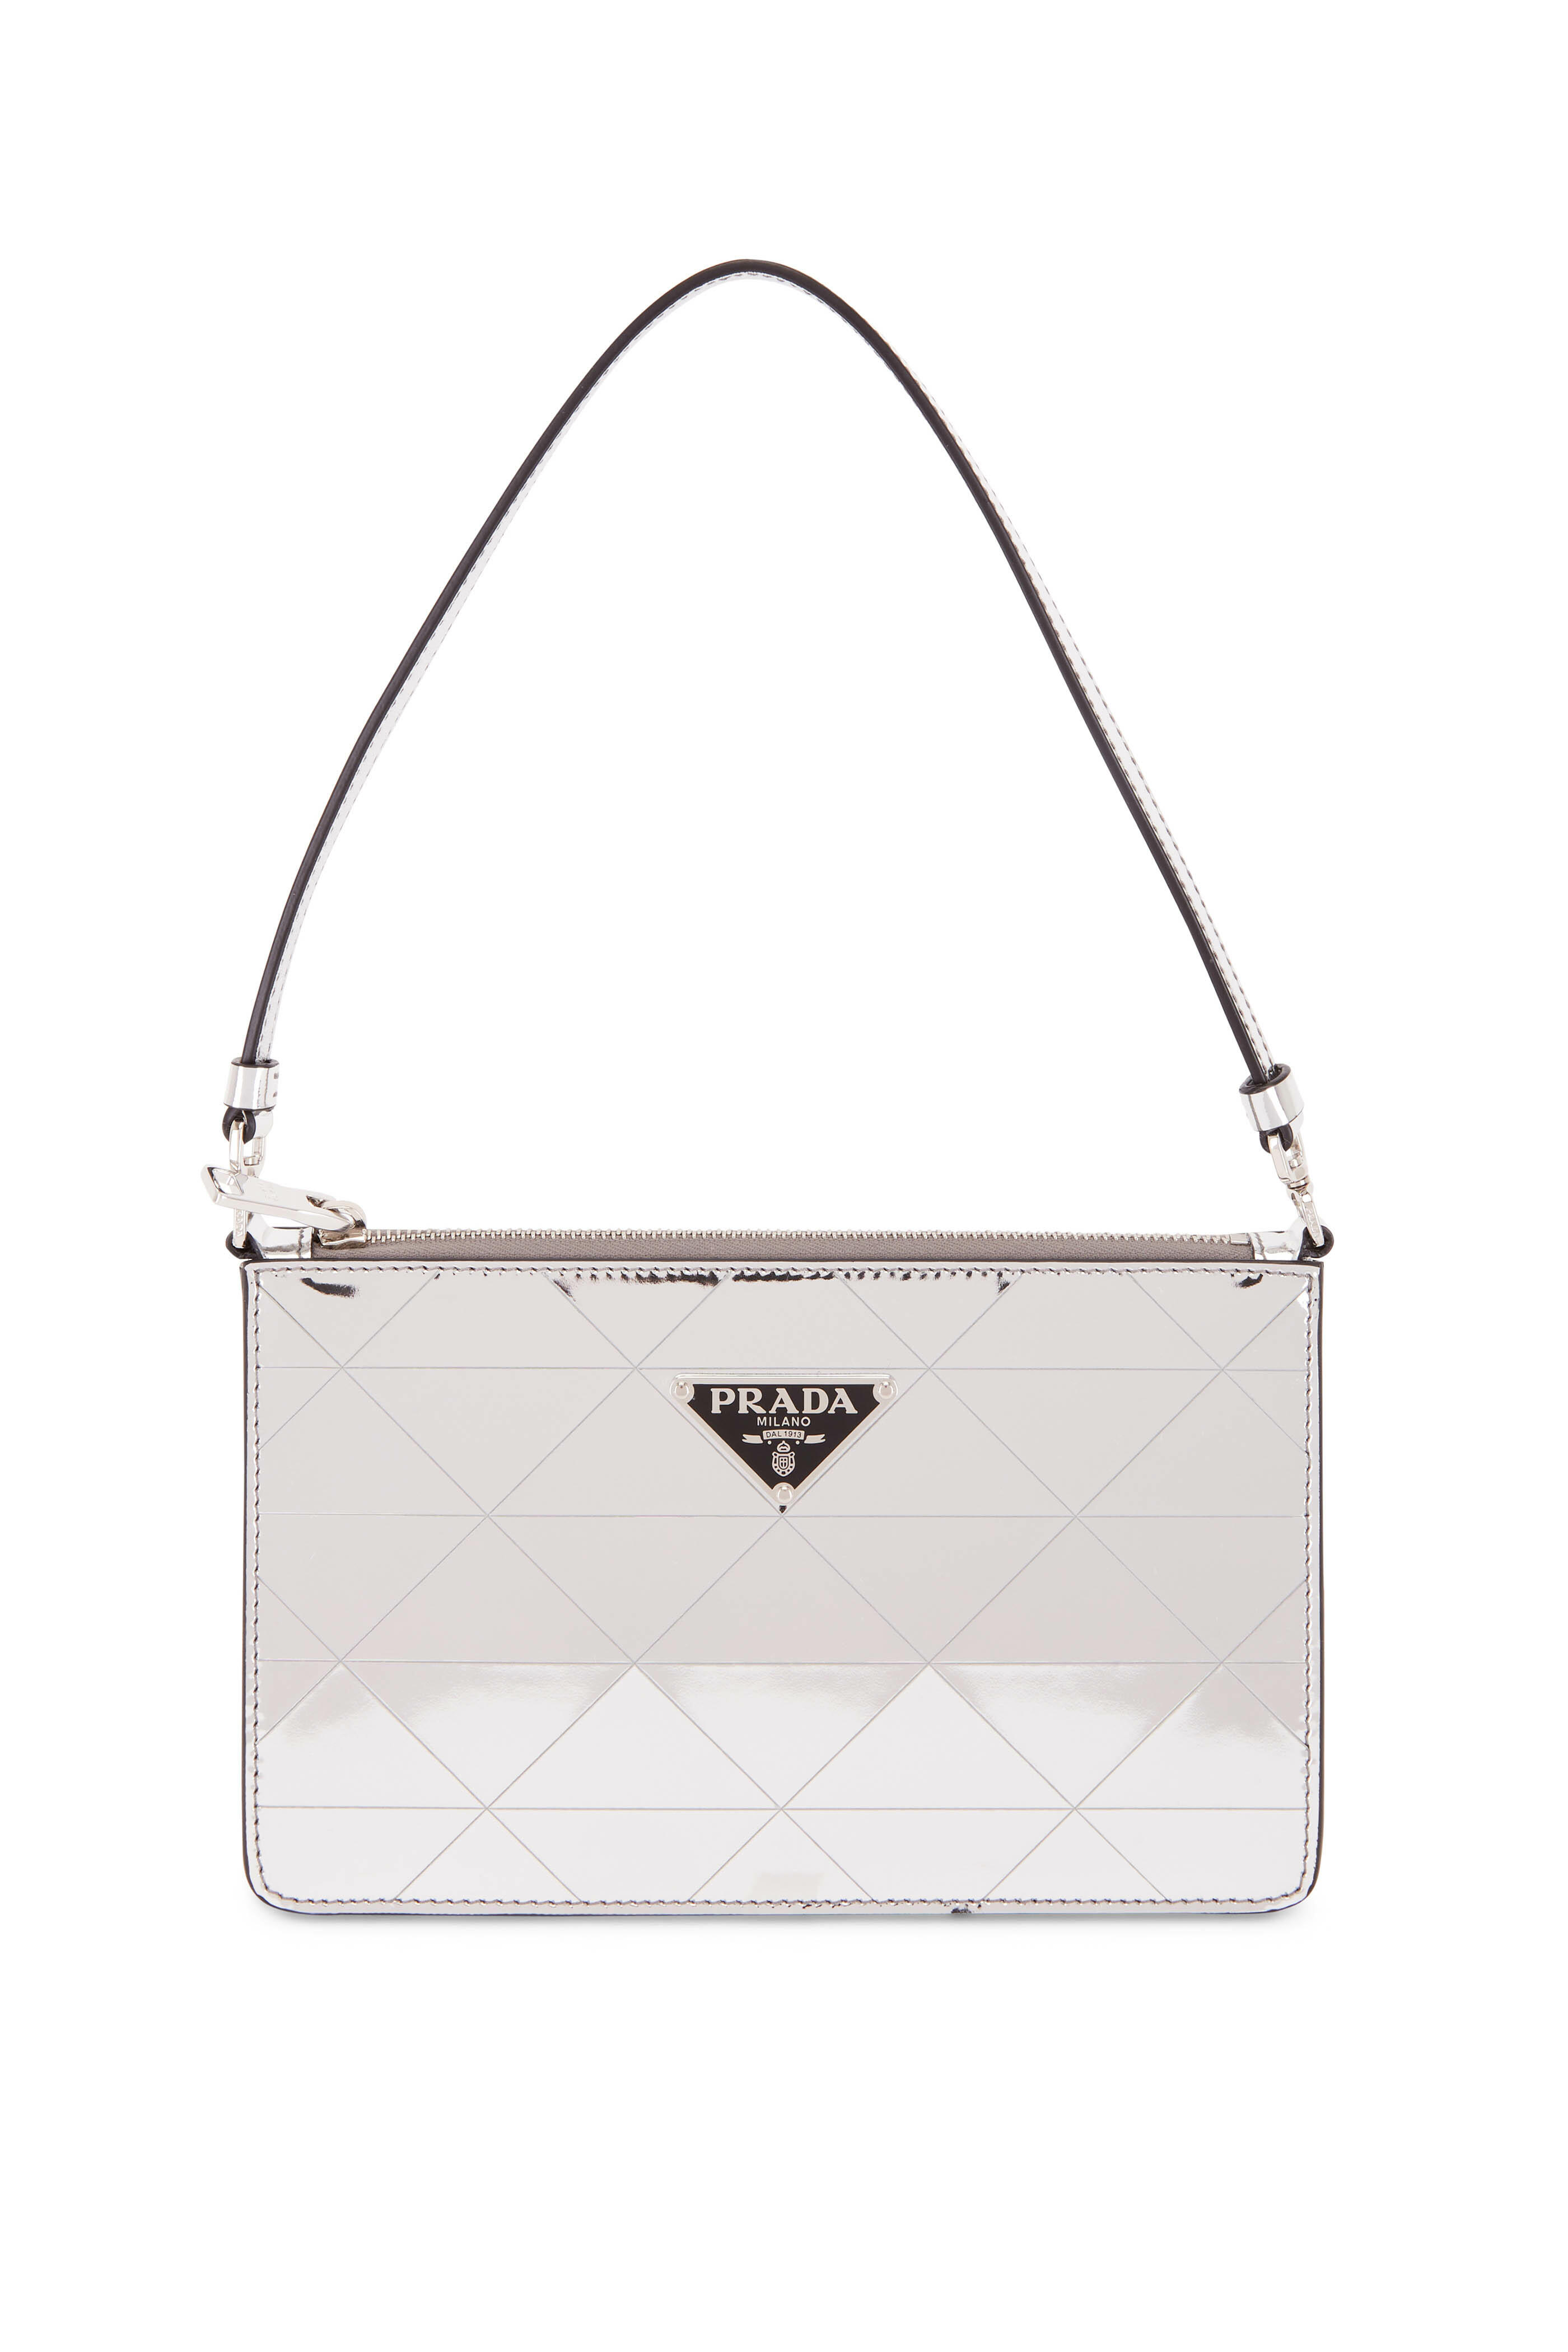 Prada - Silver Mirror Top Zip Shoulder Bag | Mitchell Stores